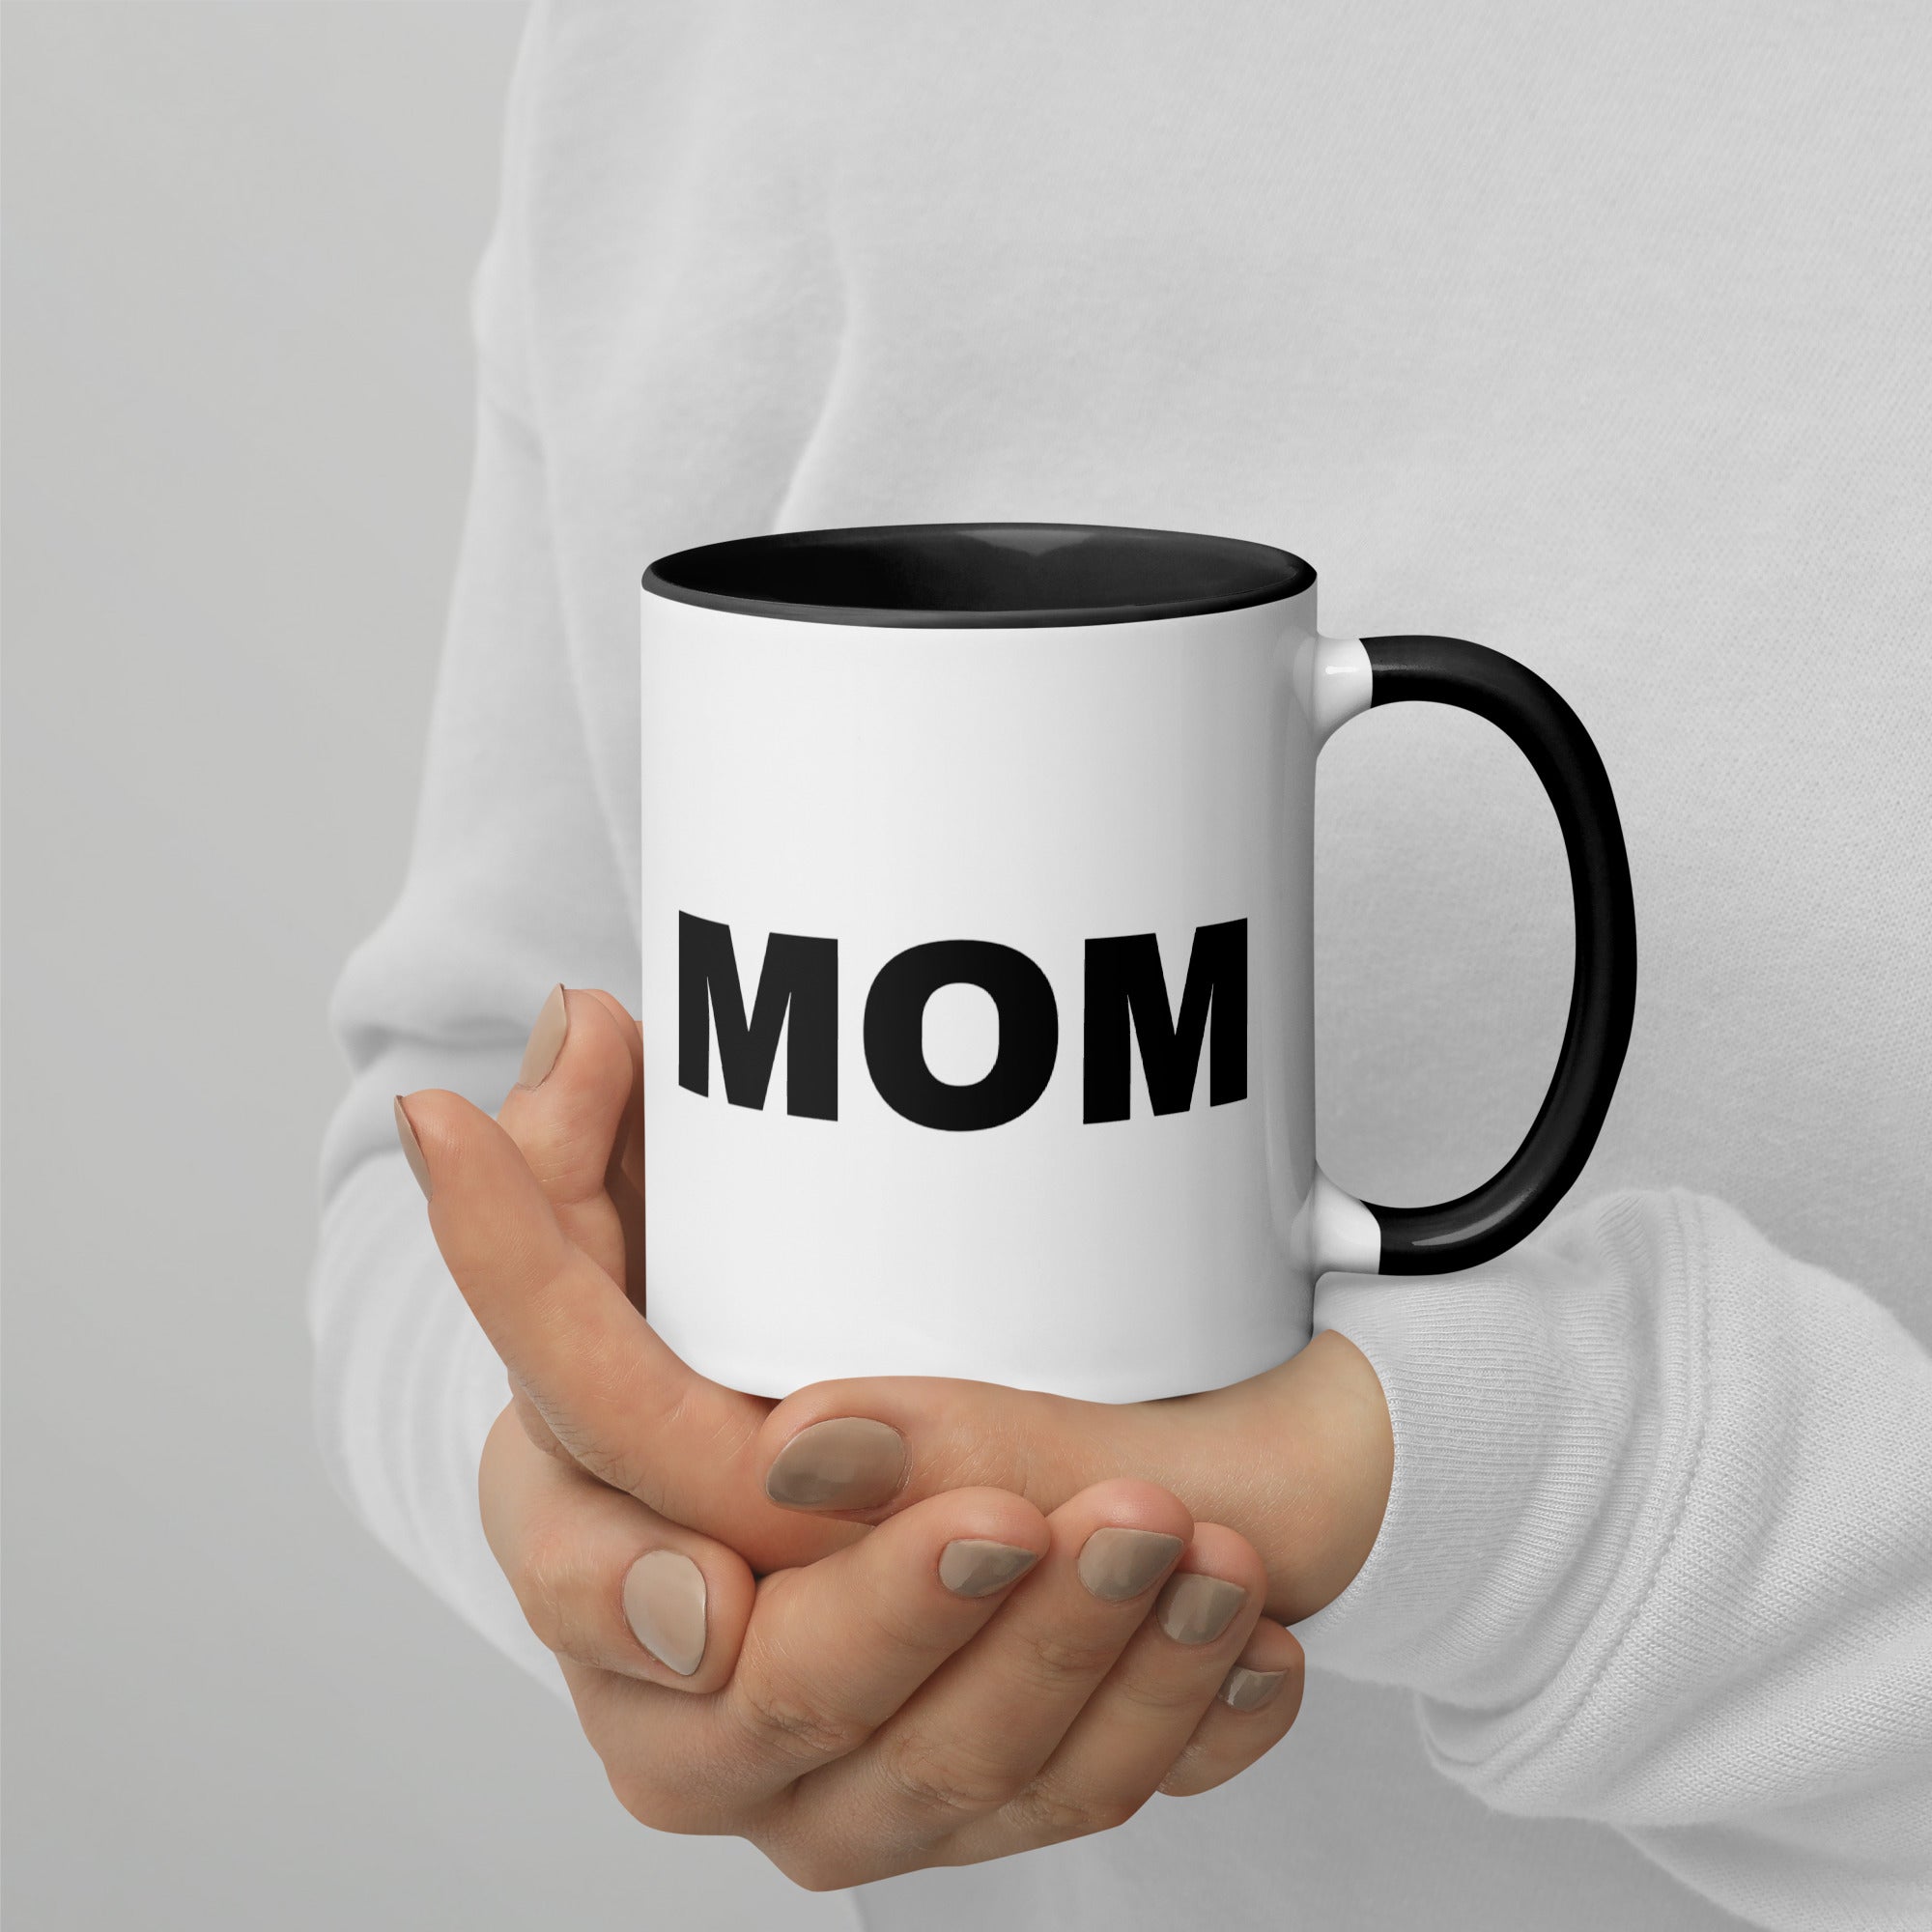 Genetic Genealogy "MOM" Mug with Color Inside Black and White